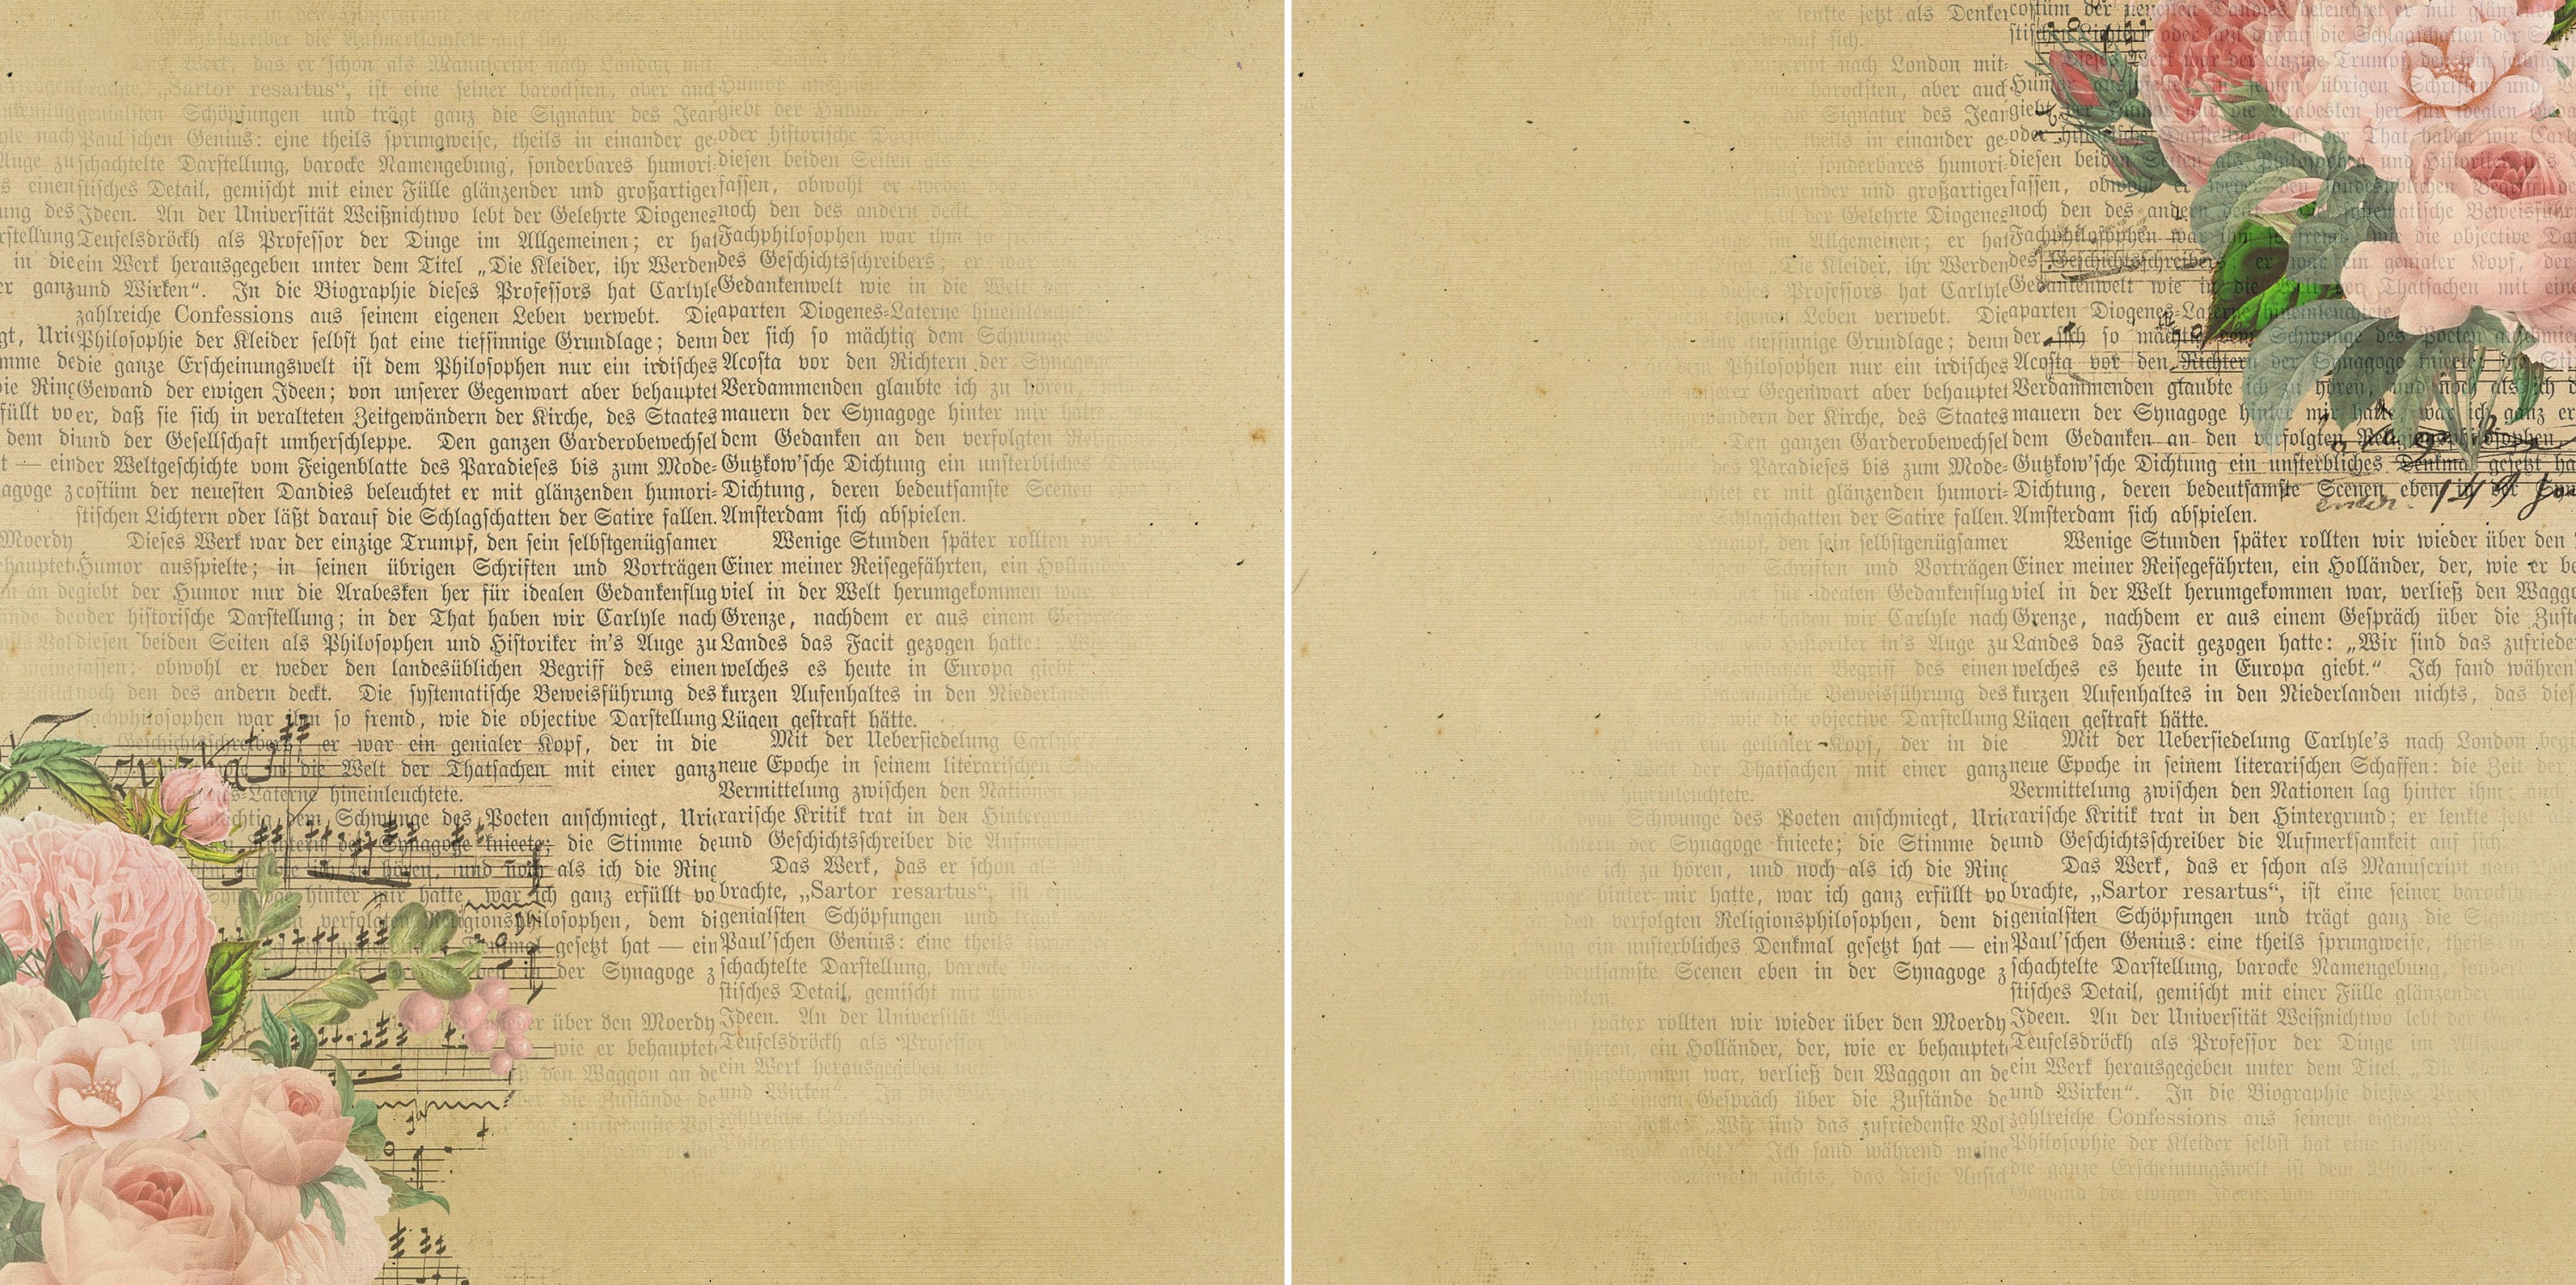 Digital Scrapbook Quick Page, 12x12 , Vintage Scrapbook Layout